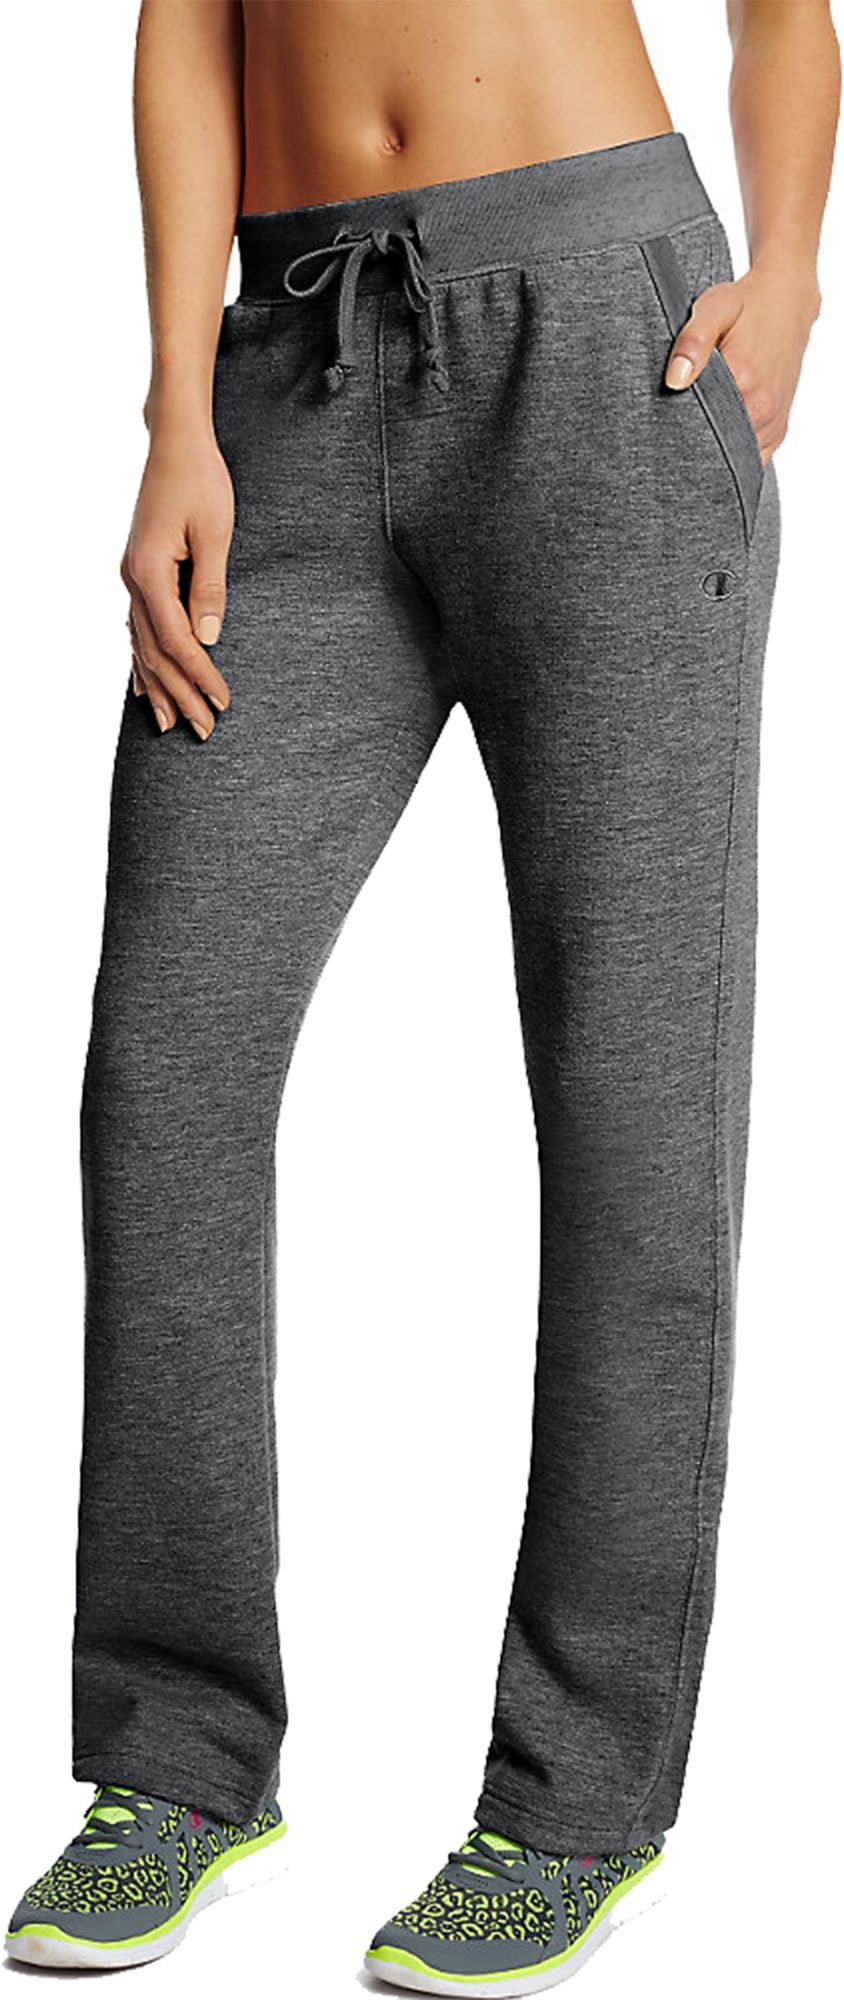 champion women's sweatpants with pockets